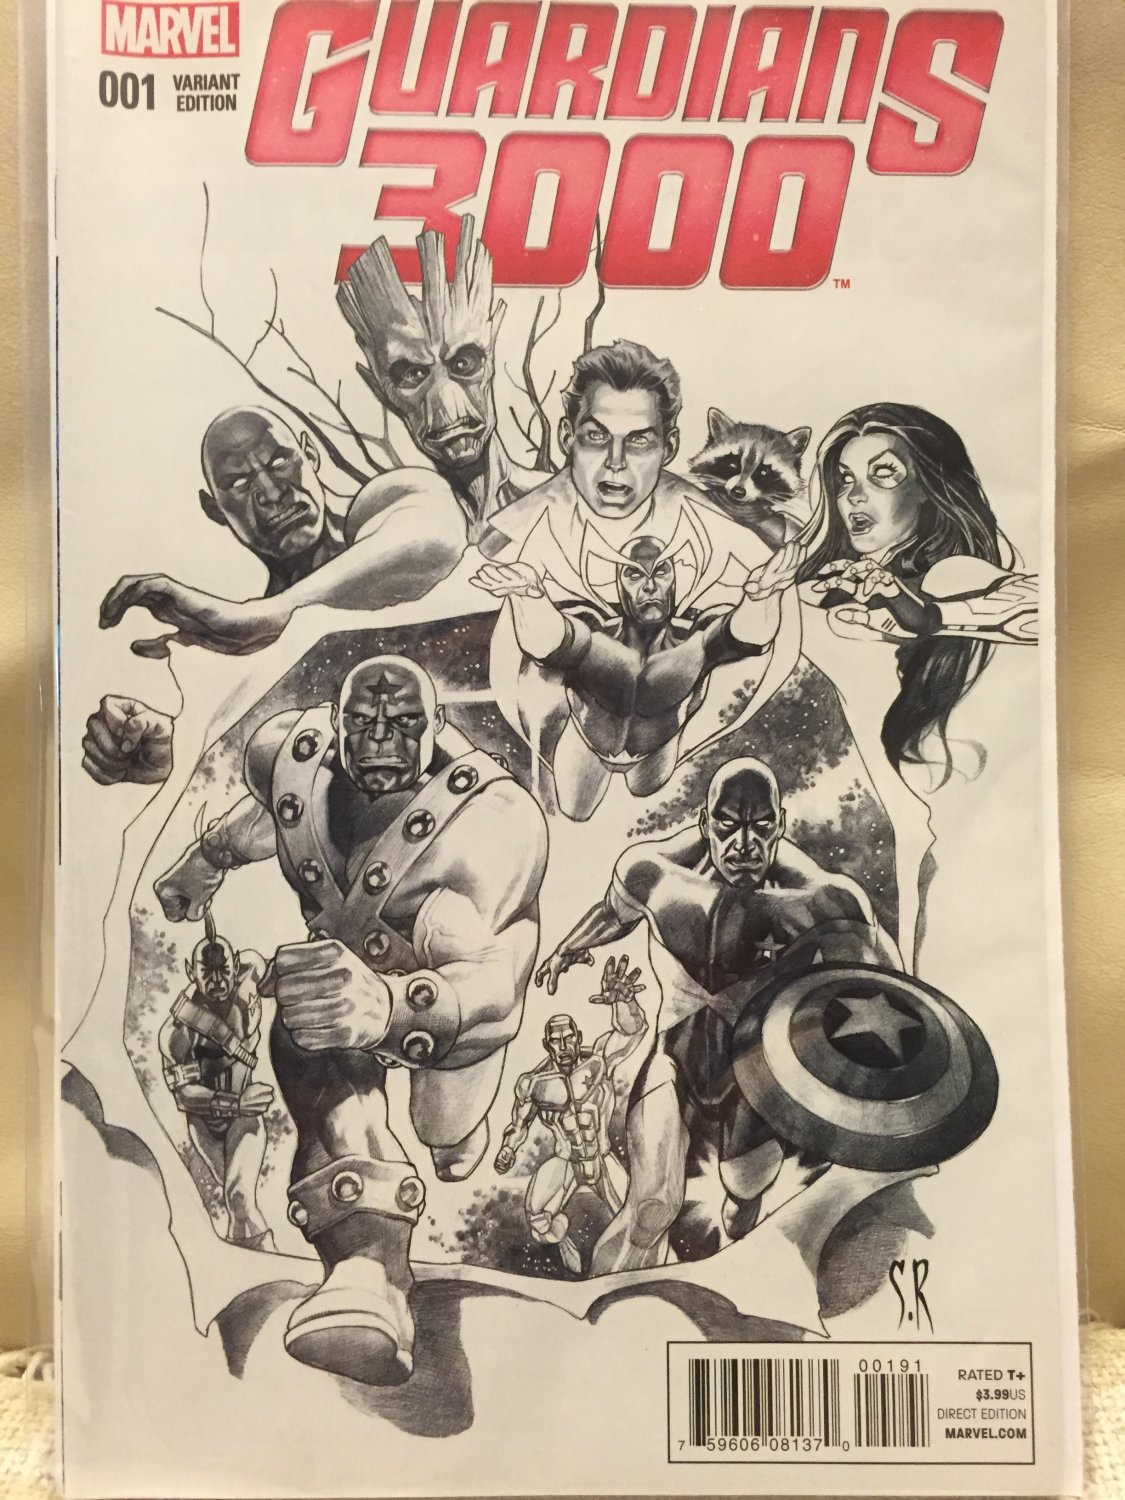 SDCC 2015 Exclusive Guardians 3000 Variant Edition